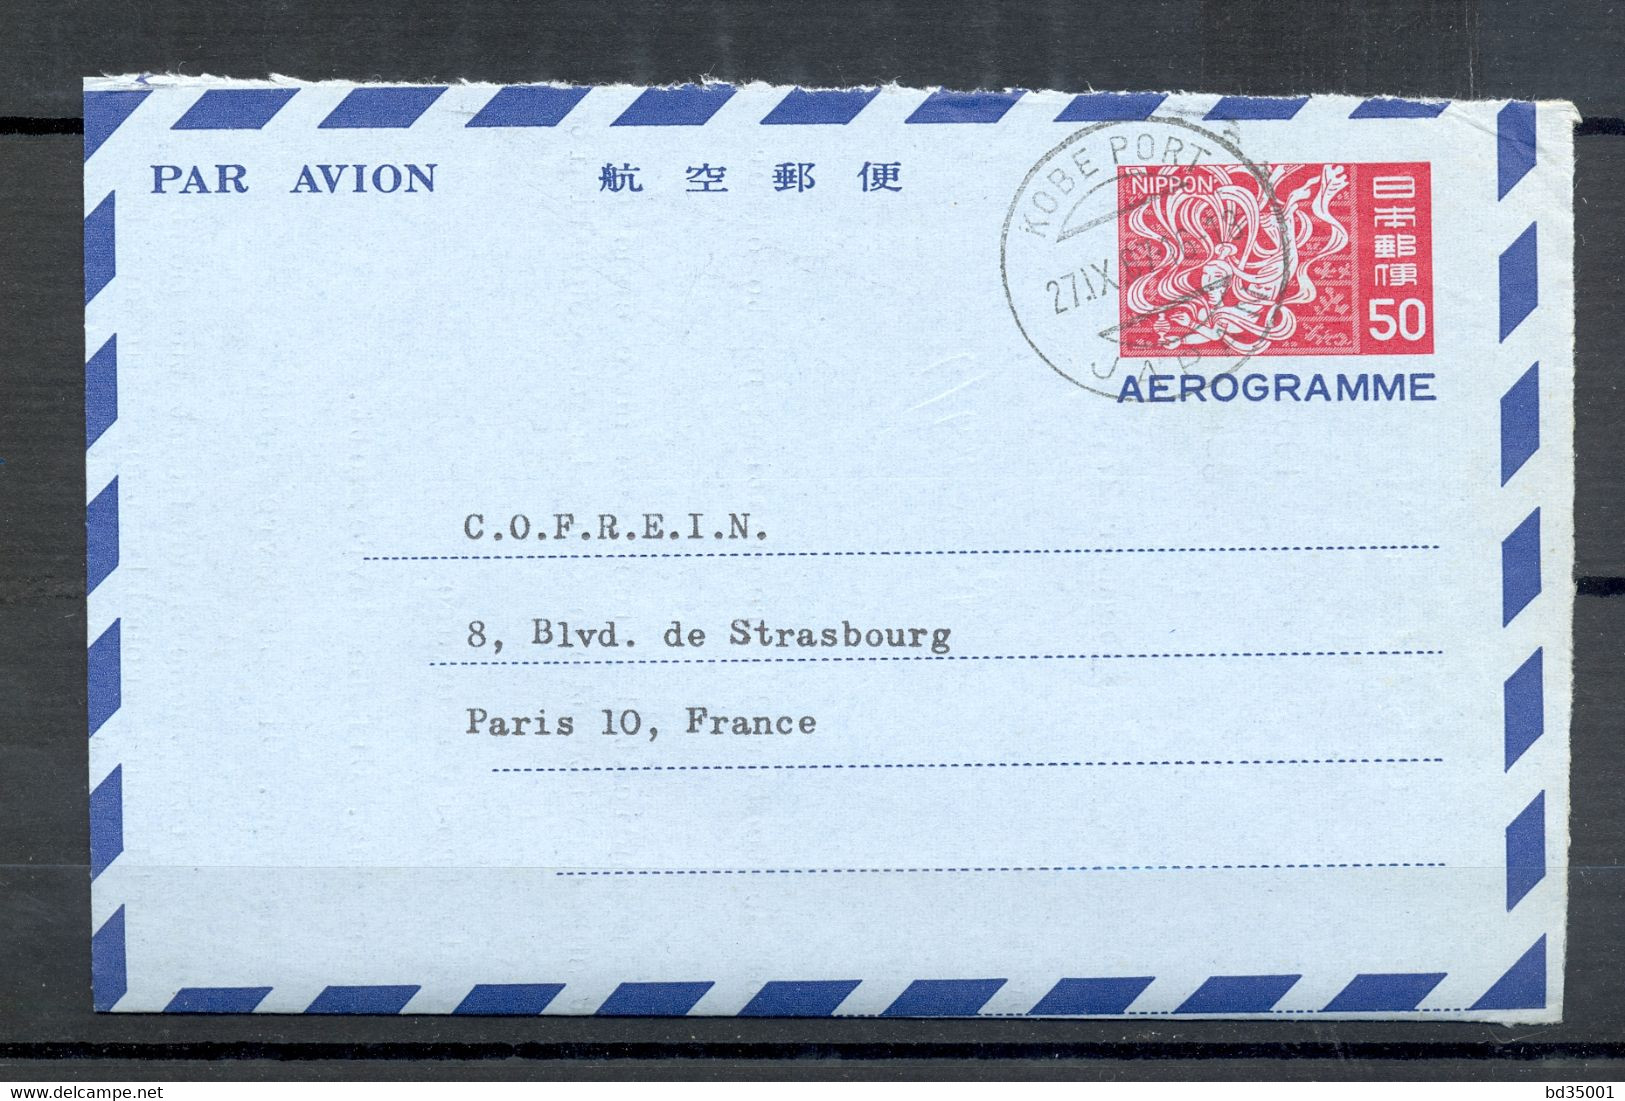 AEROGRAMME - AIR LETTER - JAPON - JAPON - 1967 - KOBE PORT VERS PARIS - (6) - Aerogramme